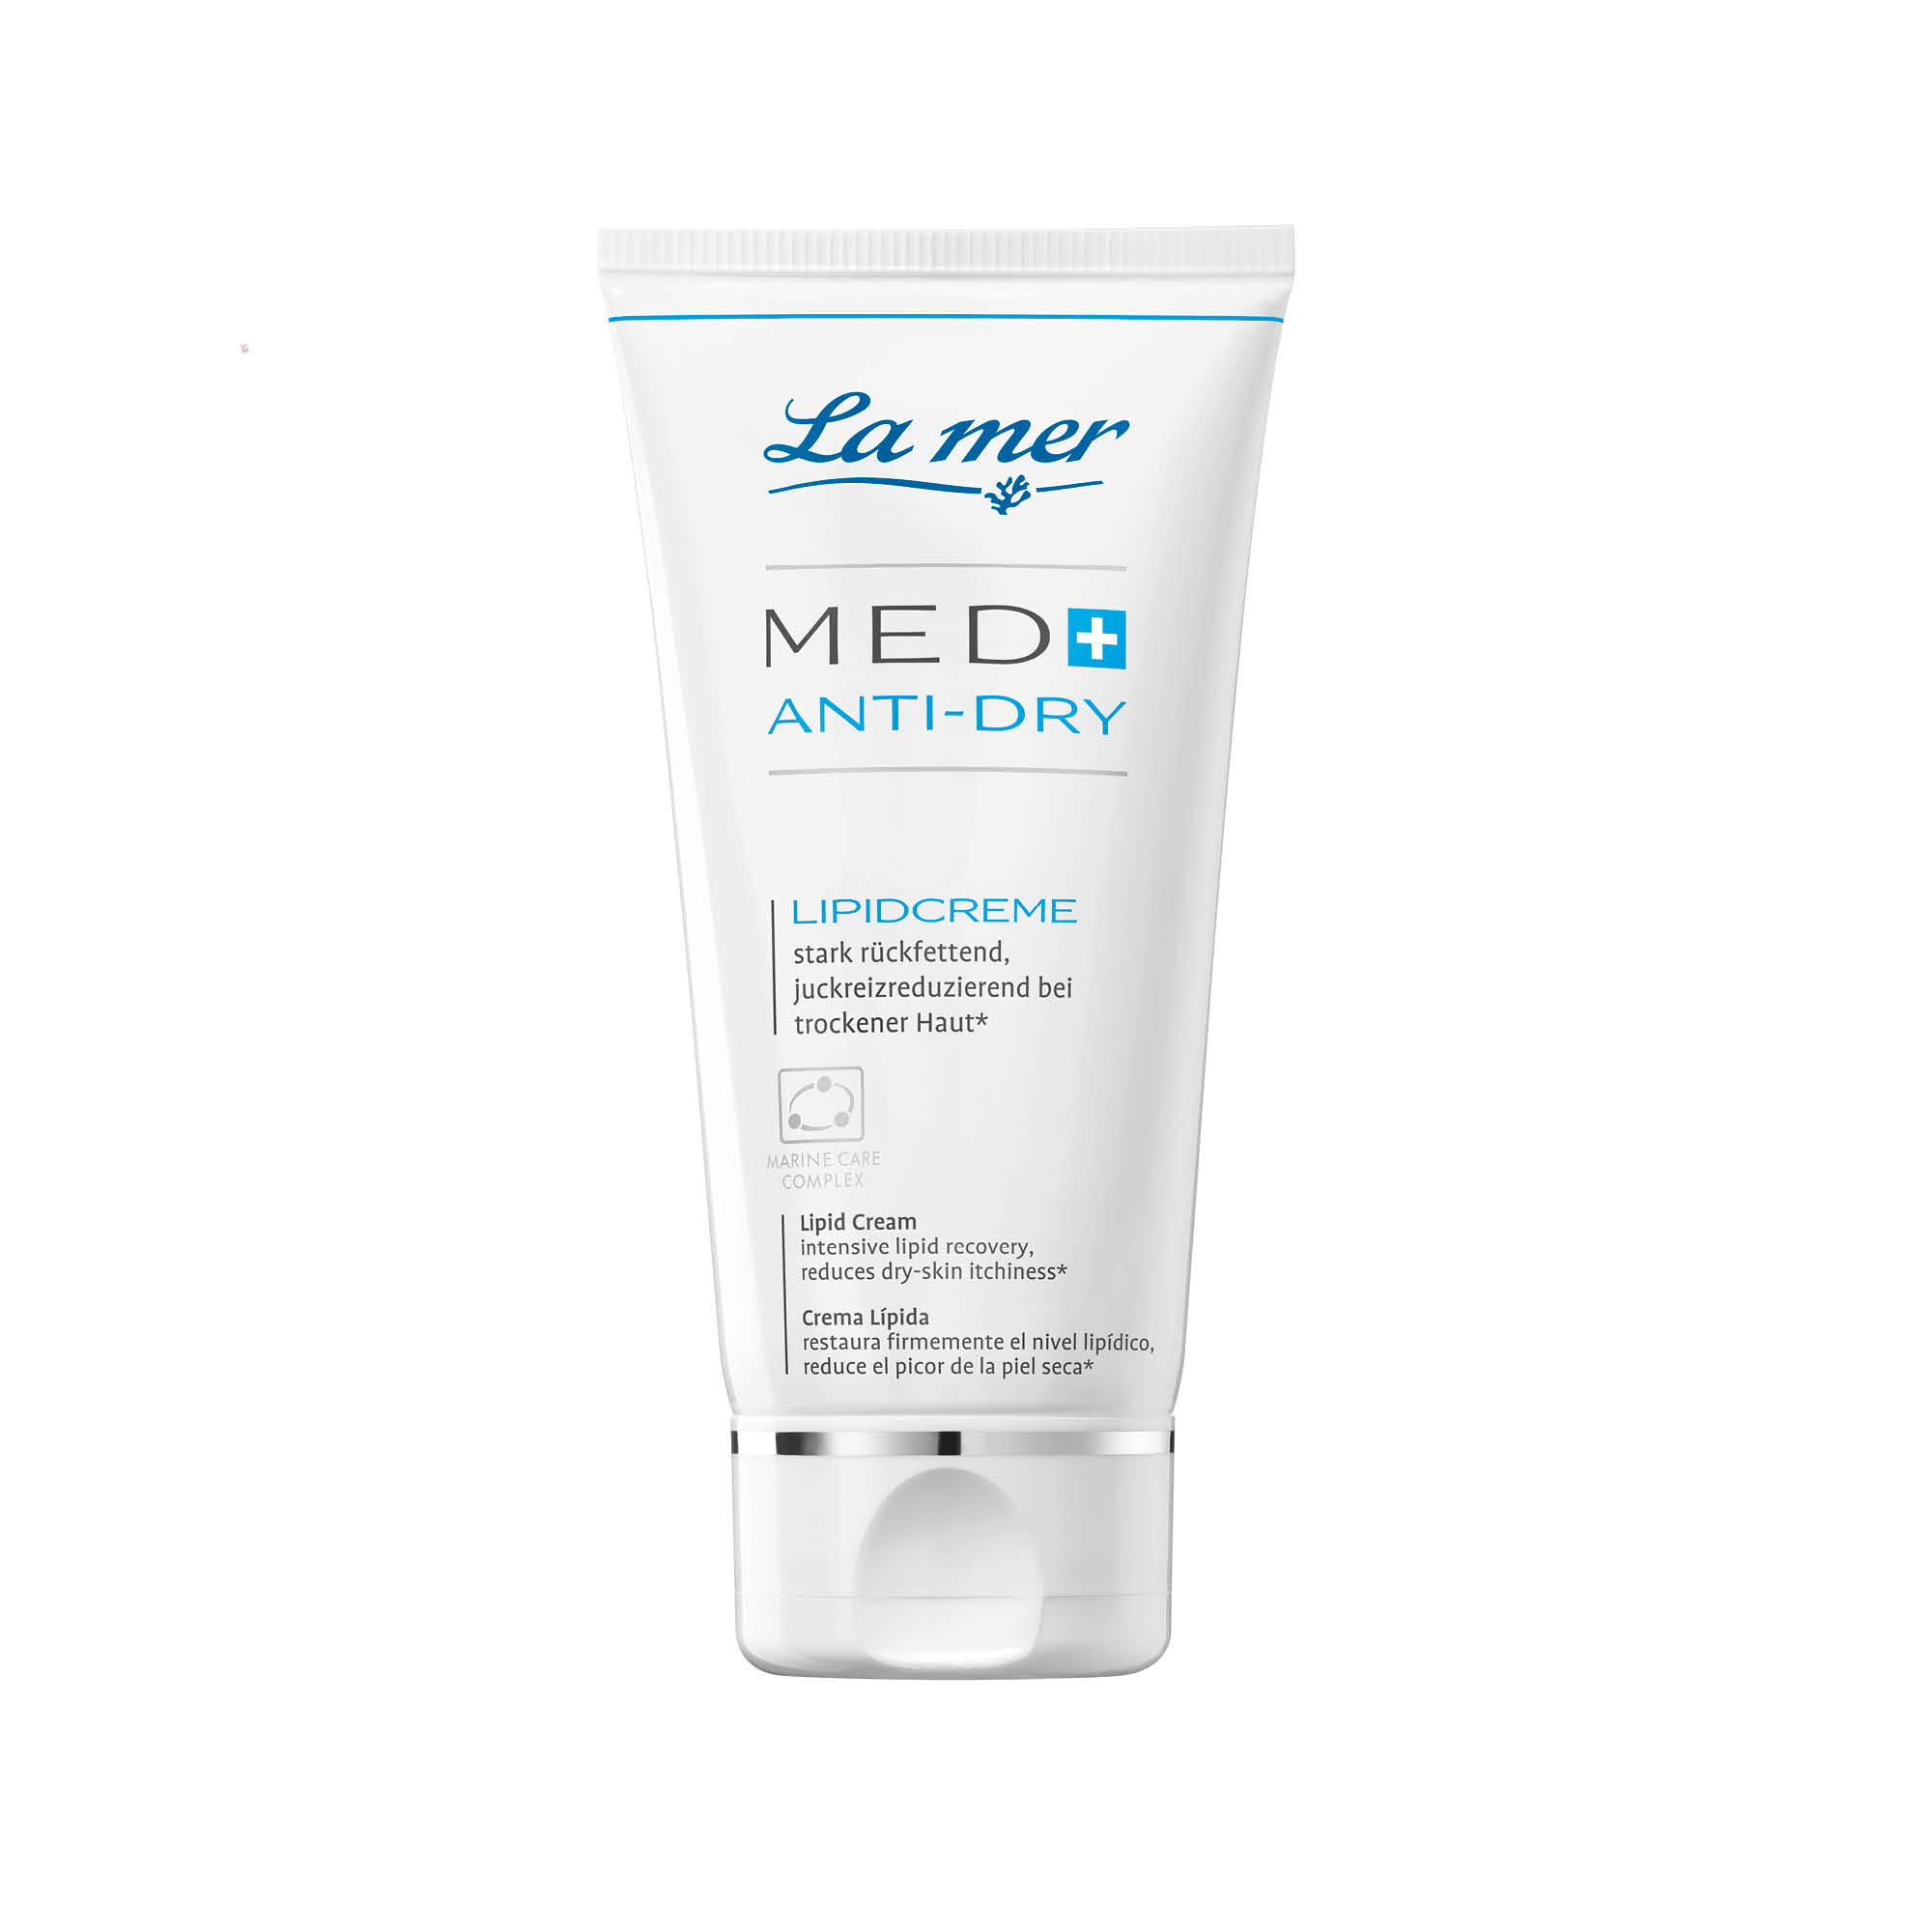 Med + Anti-Dry - Lipidcreme